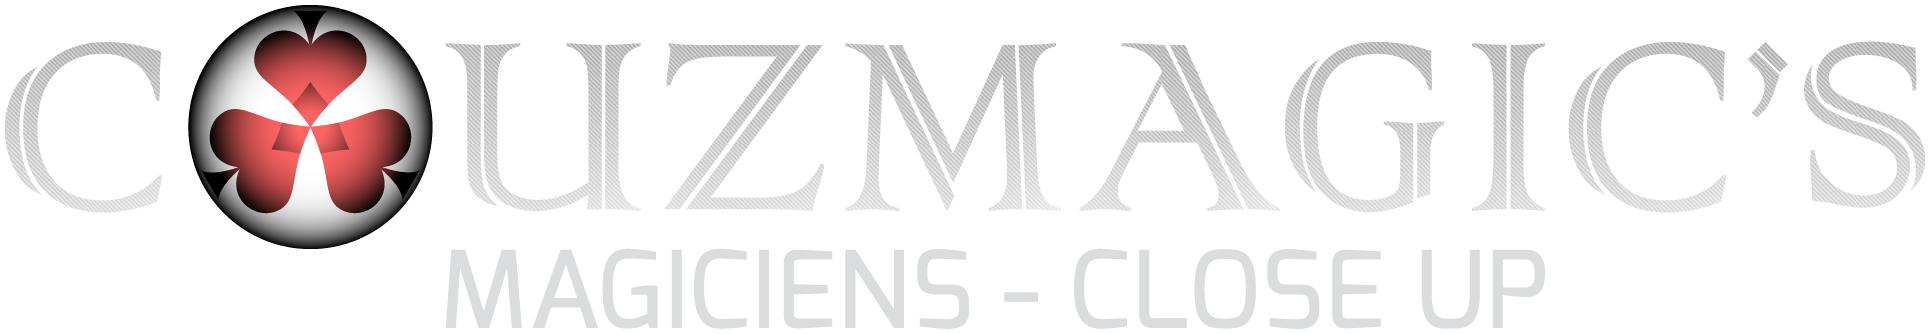 Logo Couzmagic's